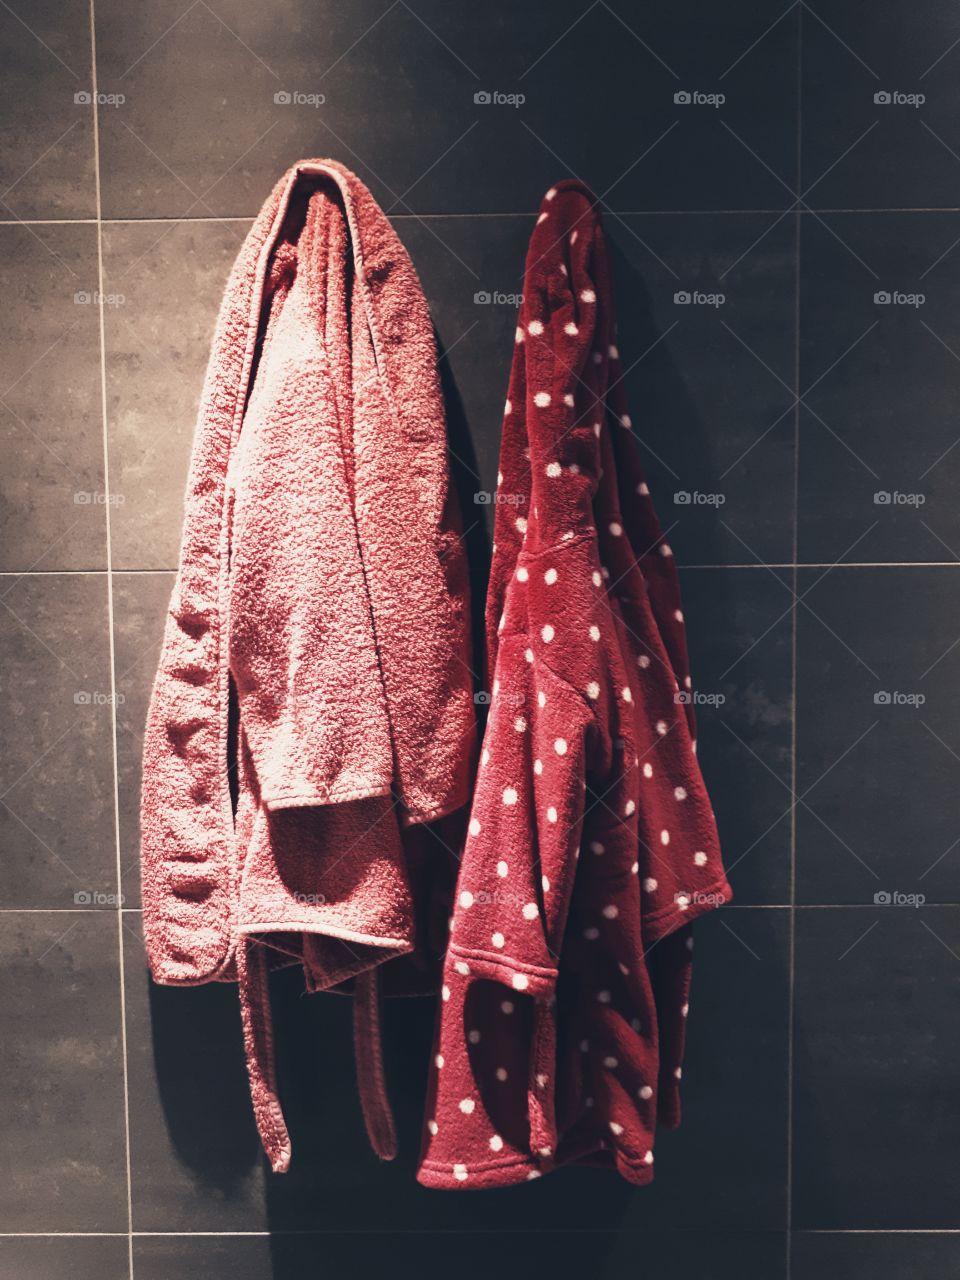 Kids bathrobe hanging in bathroom.